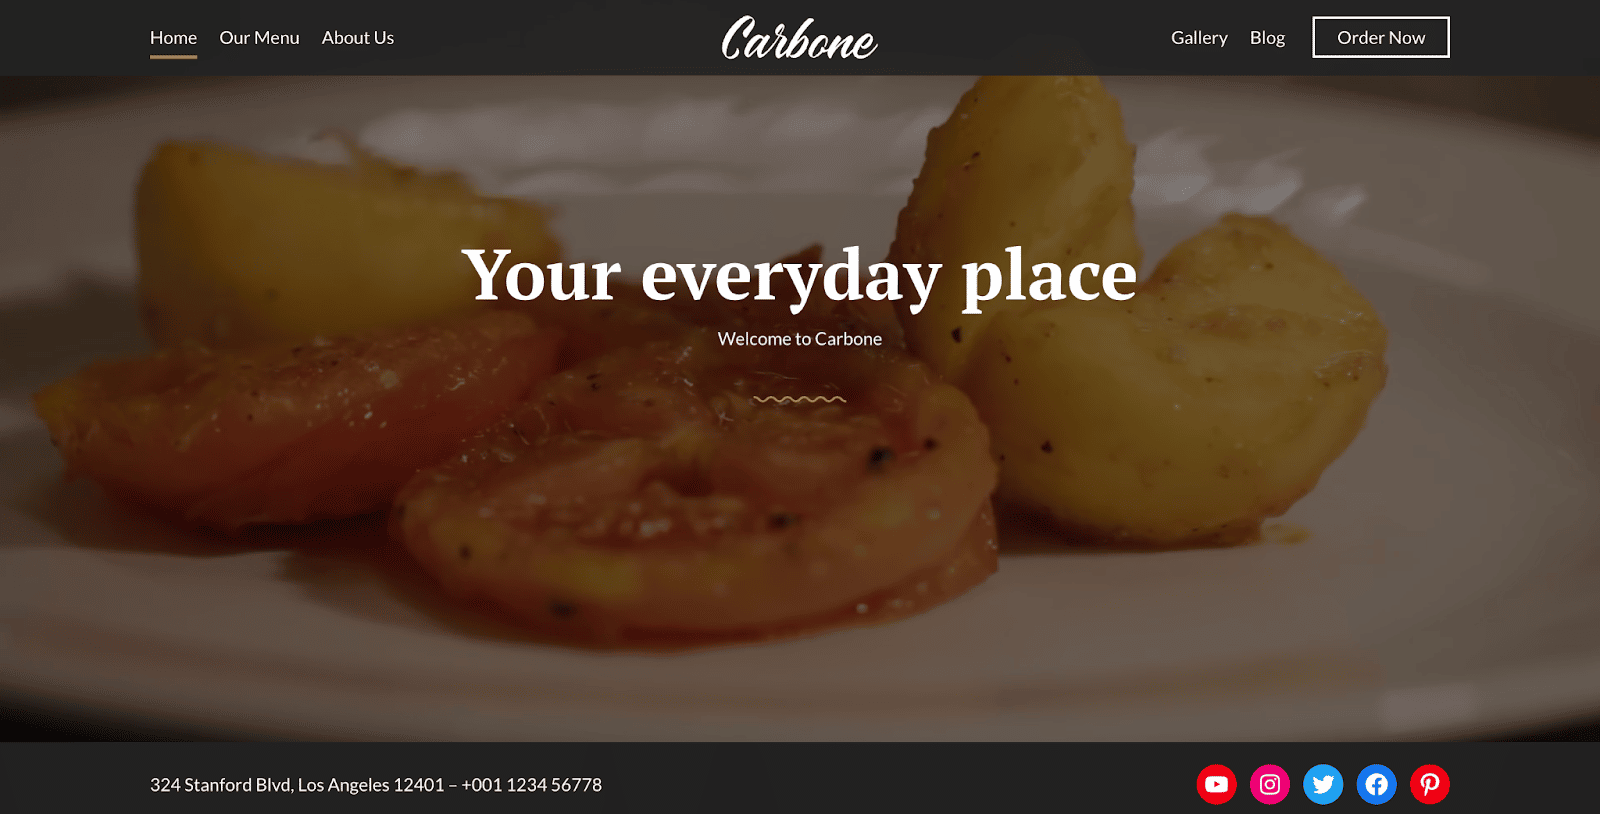 The WordPress restaurant theme Carbone.